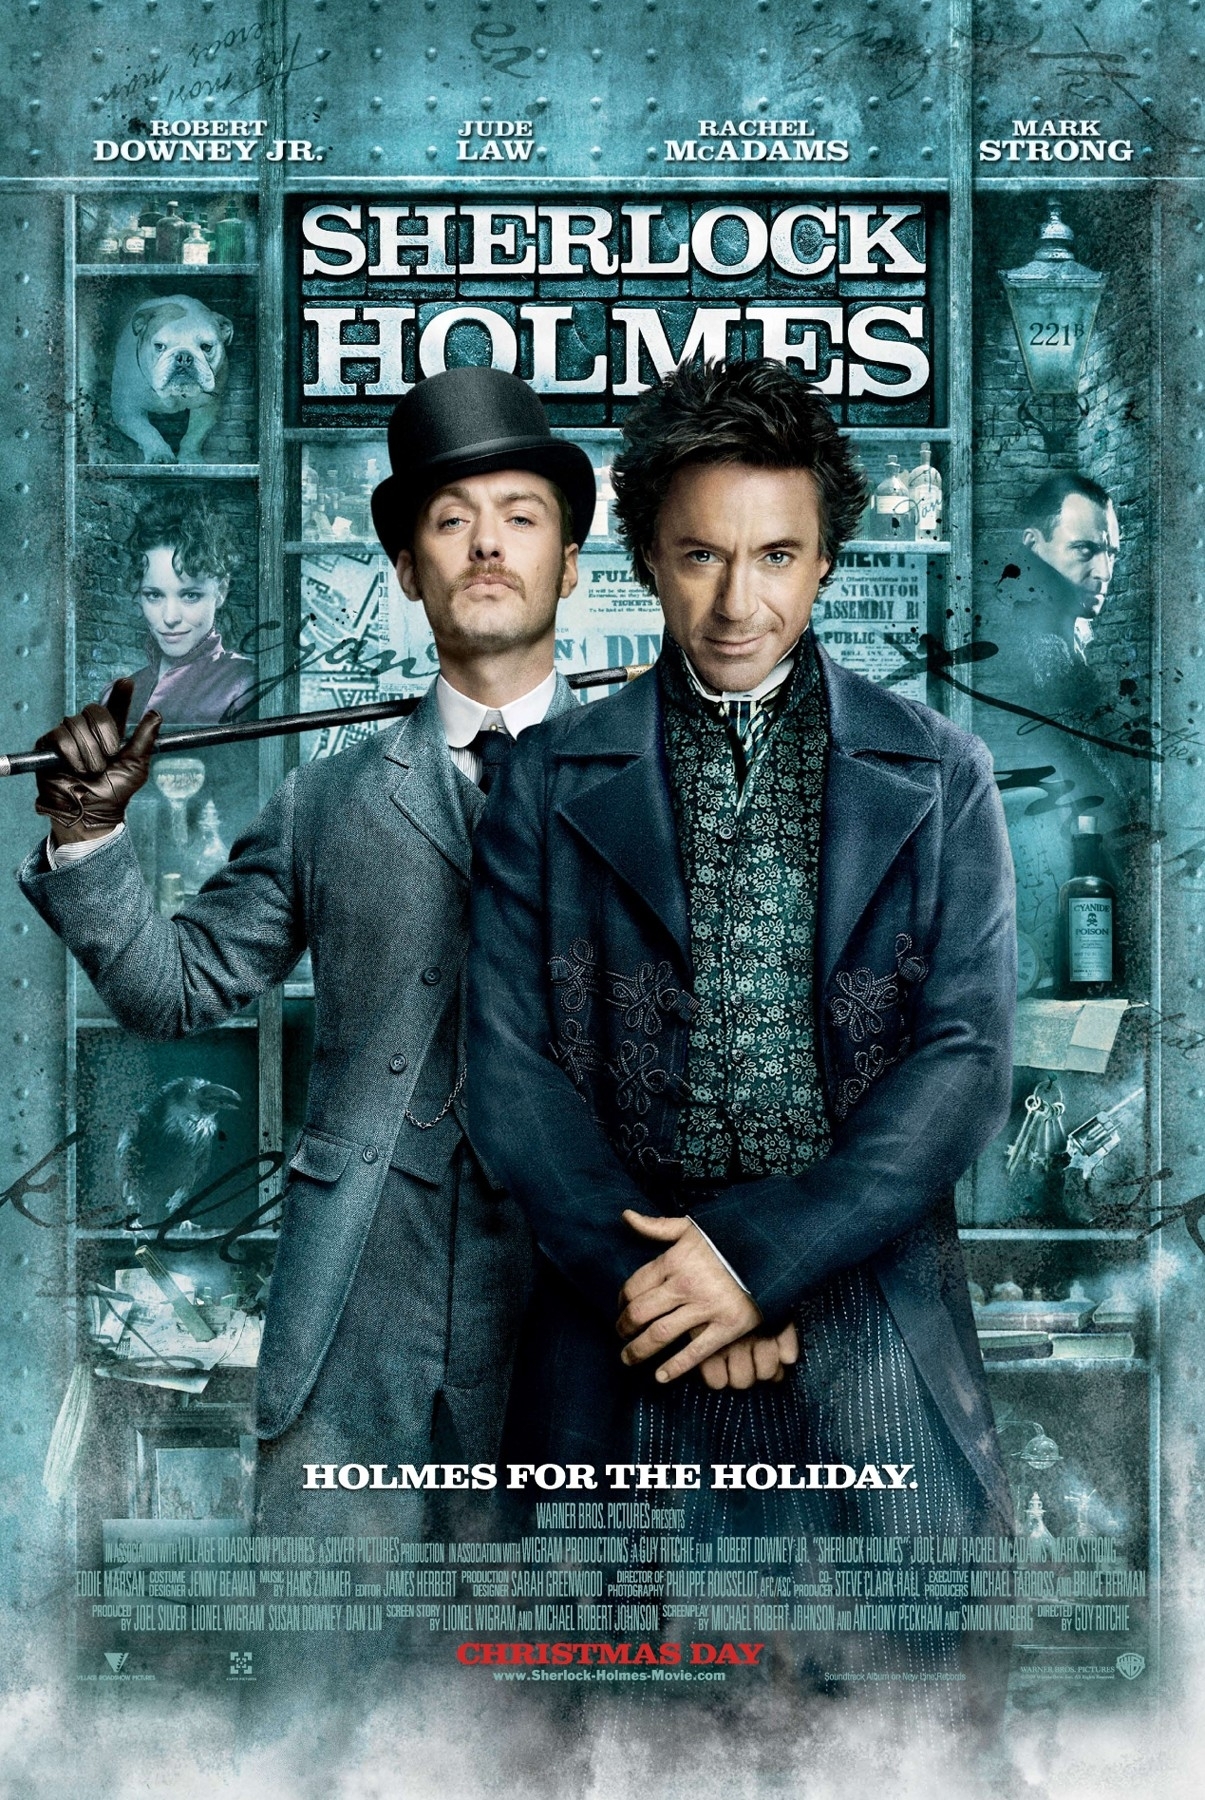 Sherlock holmes 3 full movie download in dual audio